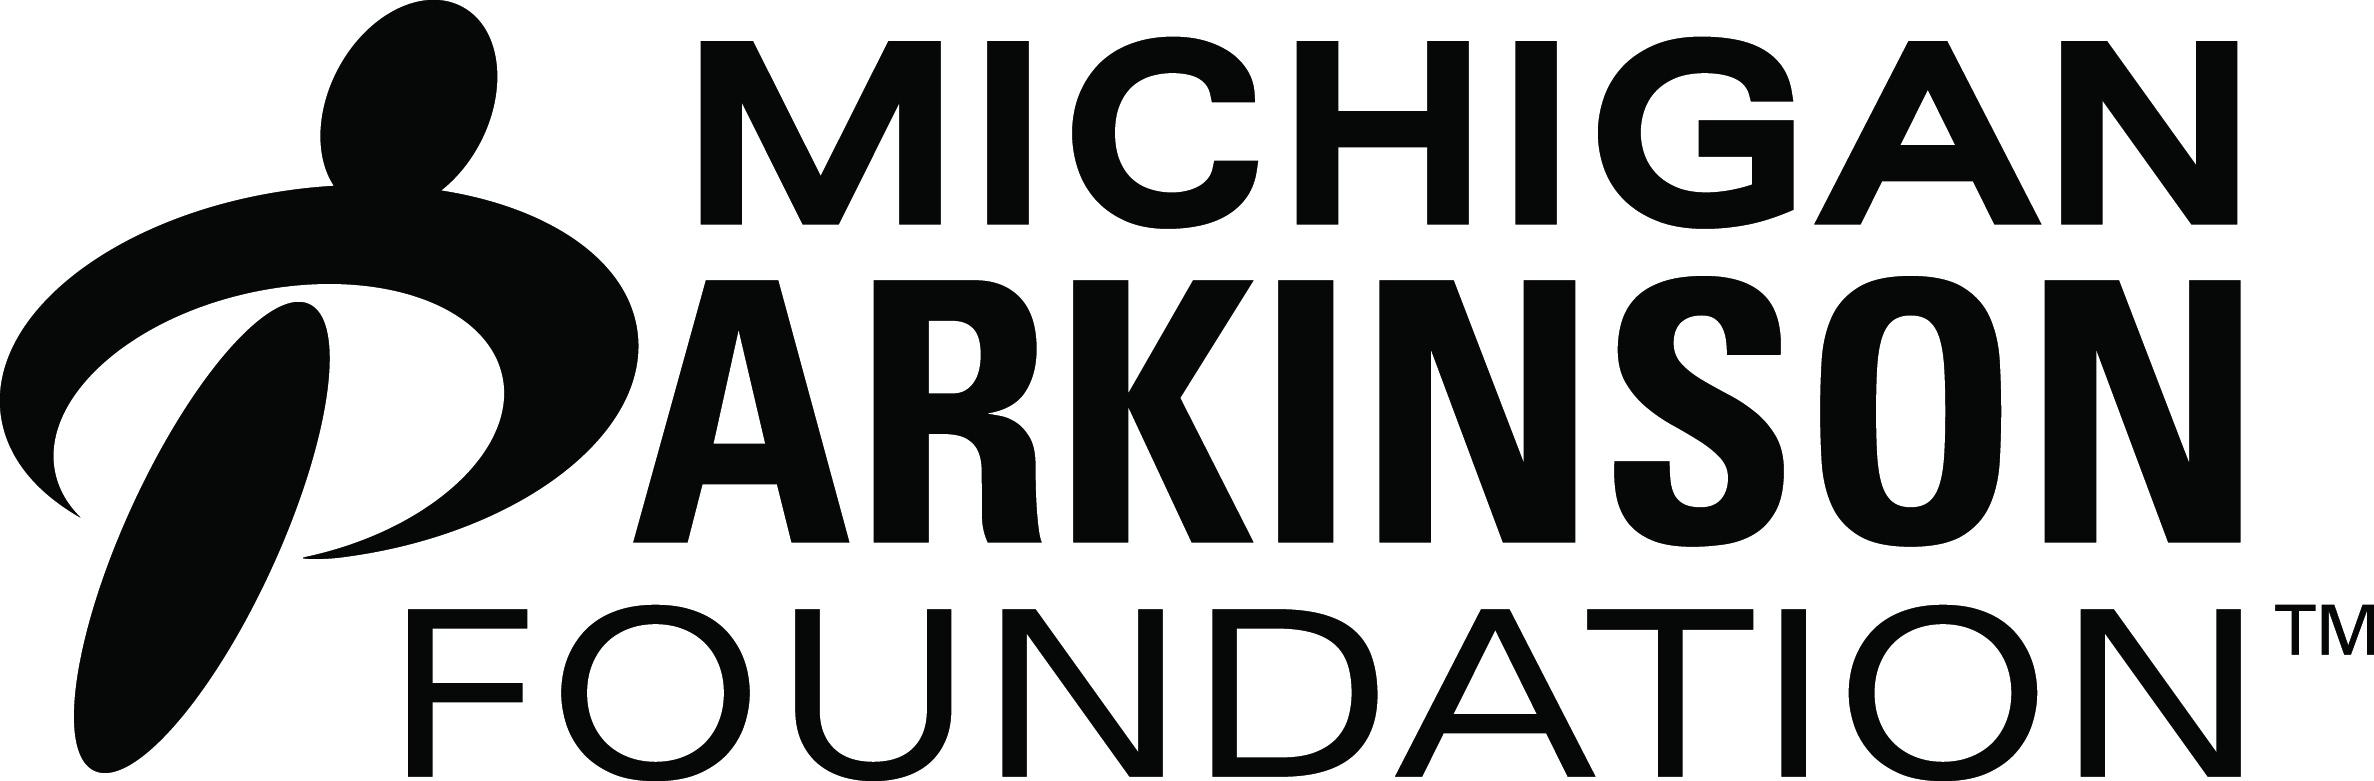 Michigan Parkinson Foundation Logo